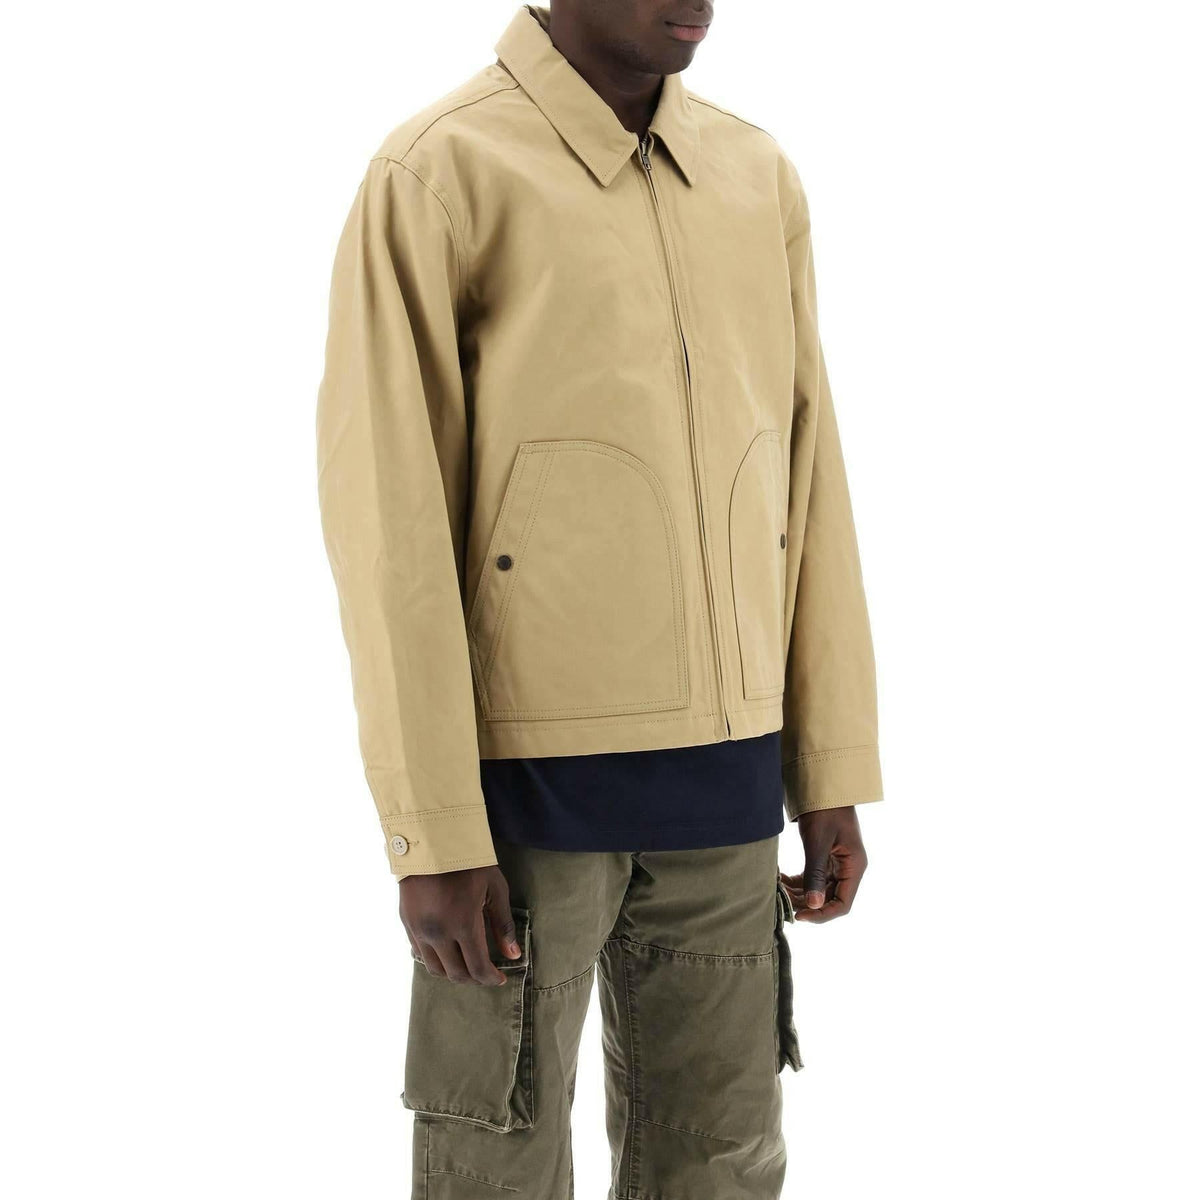 FILSON - Ranger Crewman Dry-Waxed Cotton Jacket - JOHN JULIA